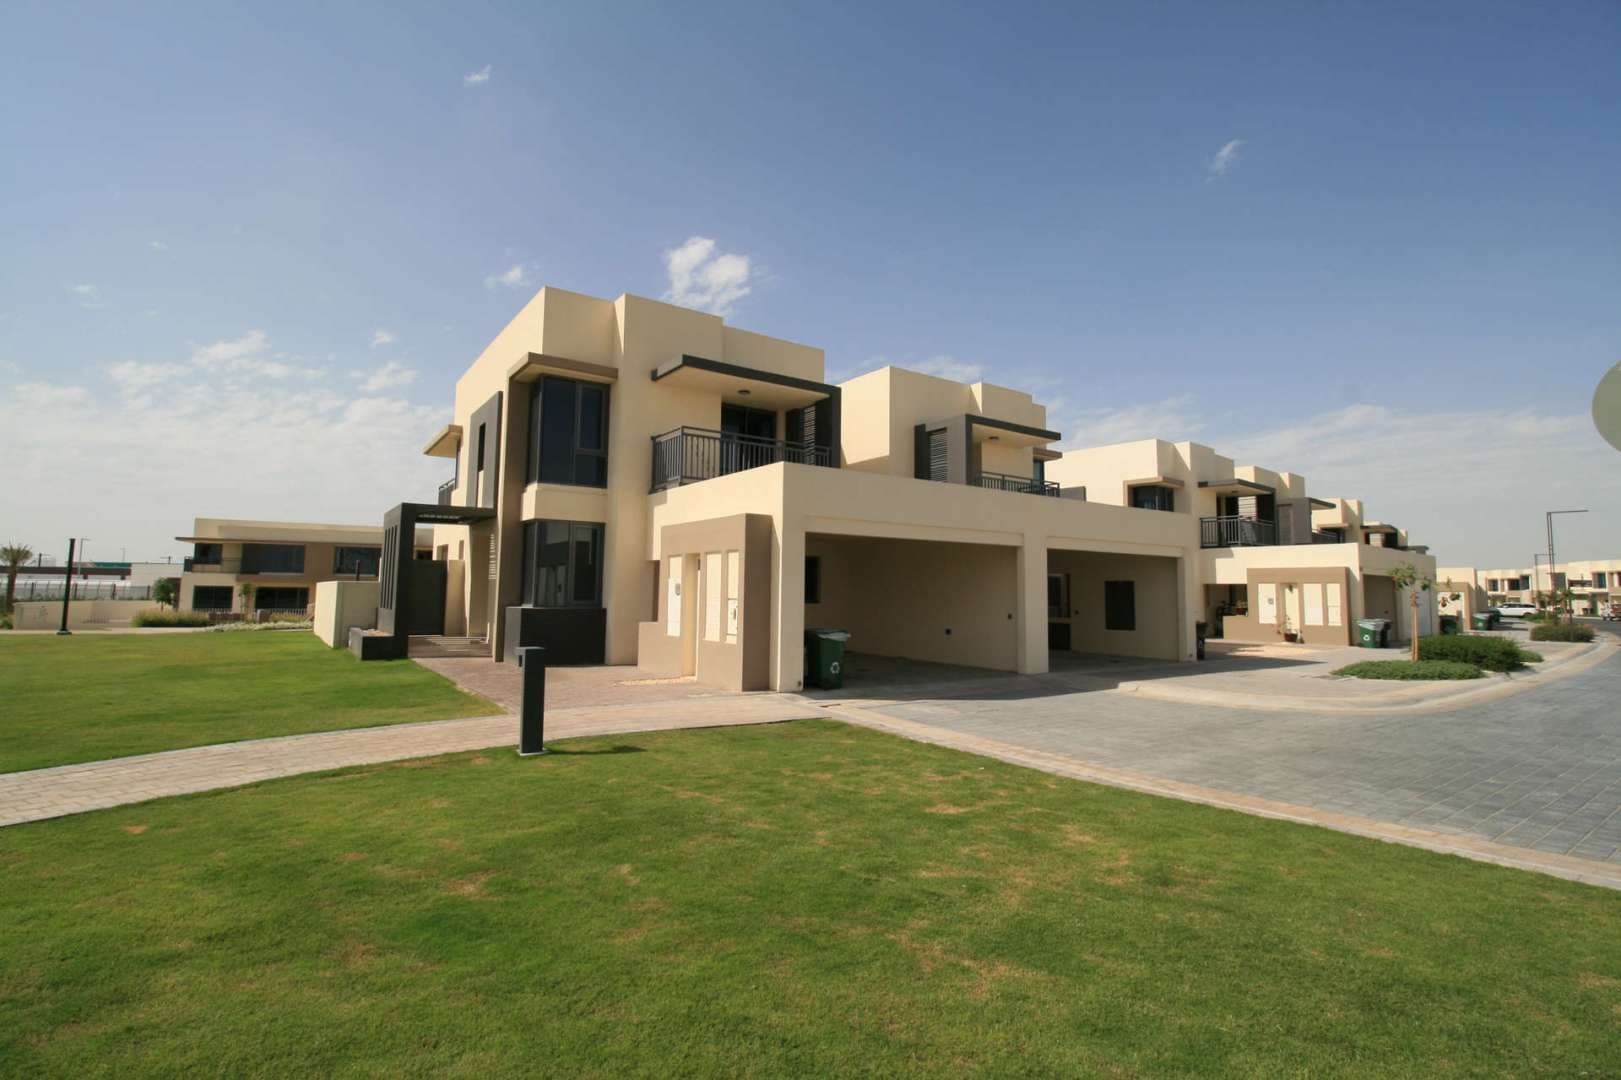 5 Bedroom Townhouse For Sale Maple At Dubai Hills Estate Lp07024 1f3f83a8beb4d400.jpg